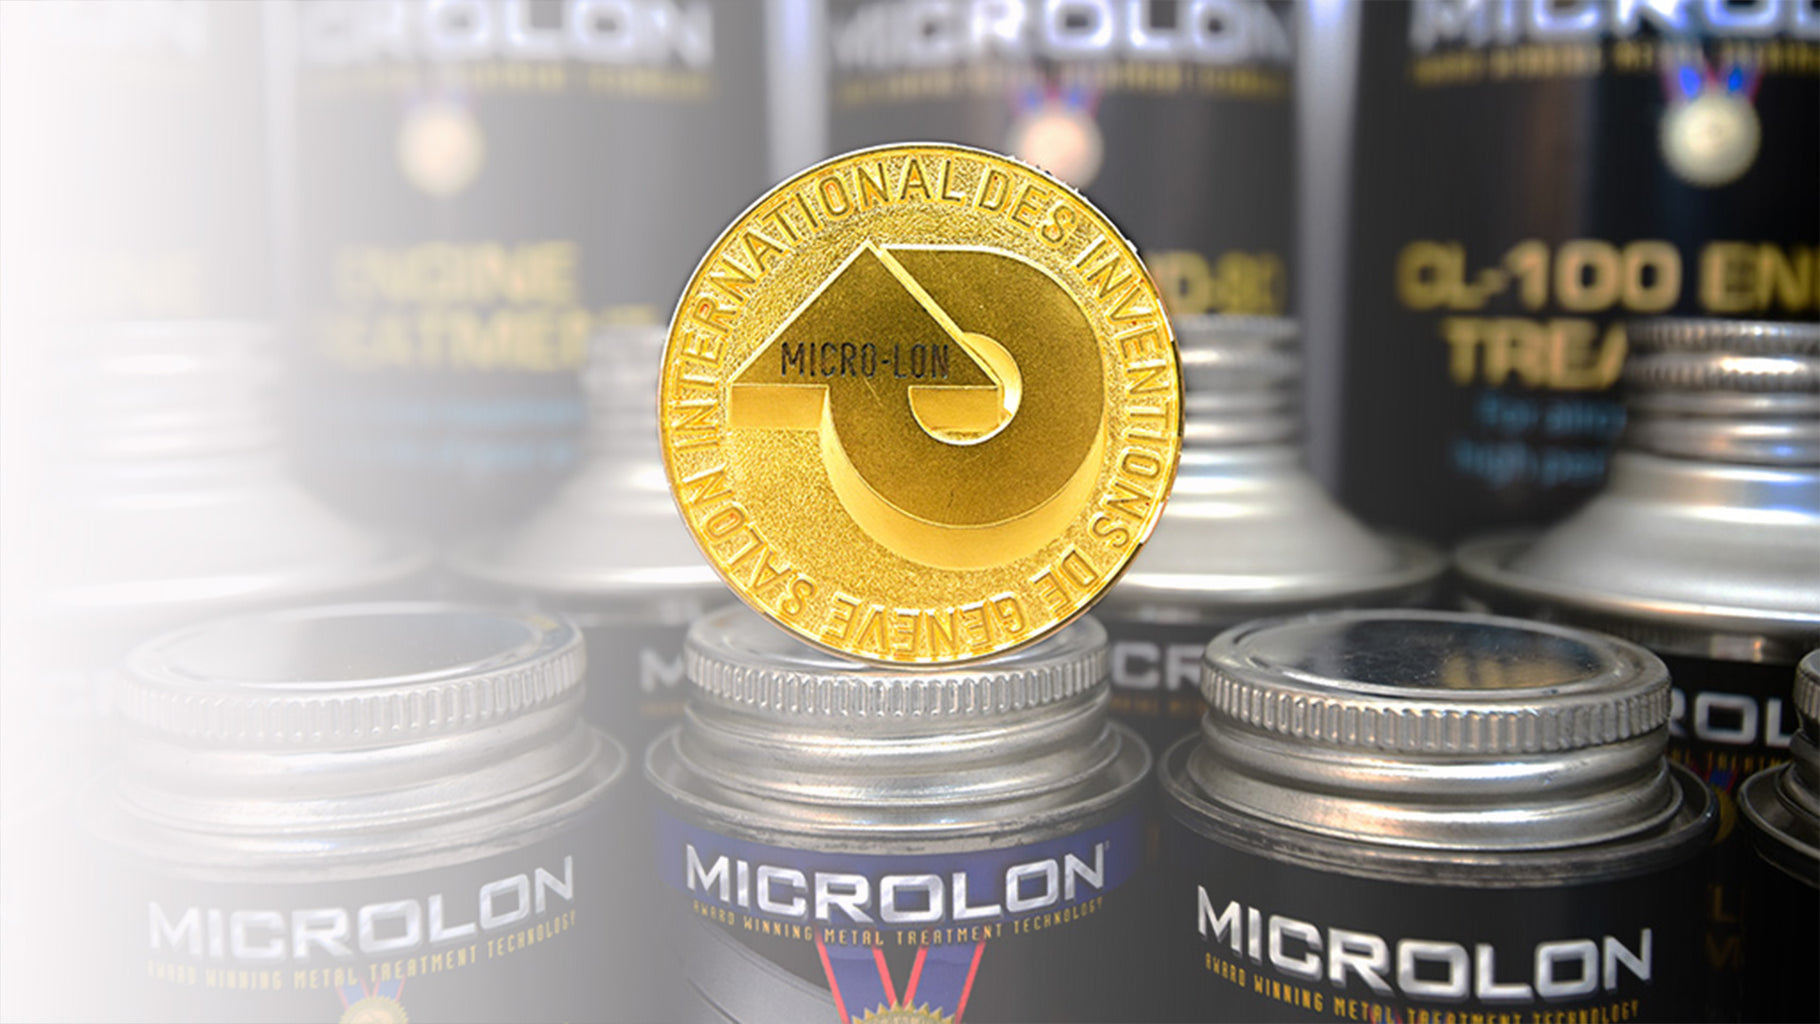 Microlon Award Winning Metal Treatment Technology